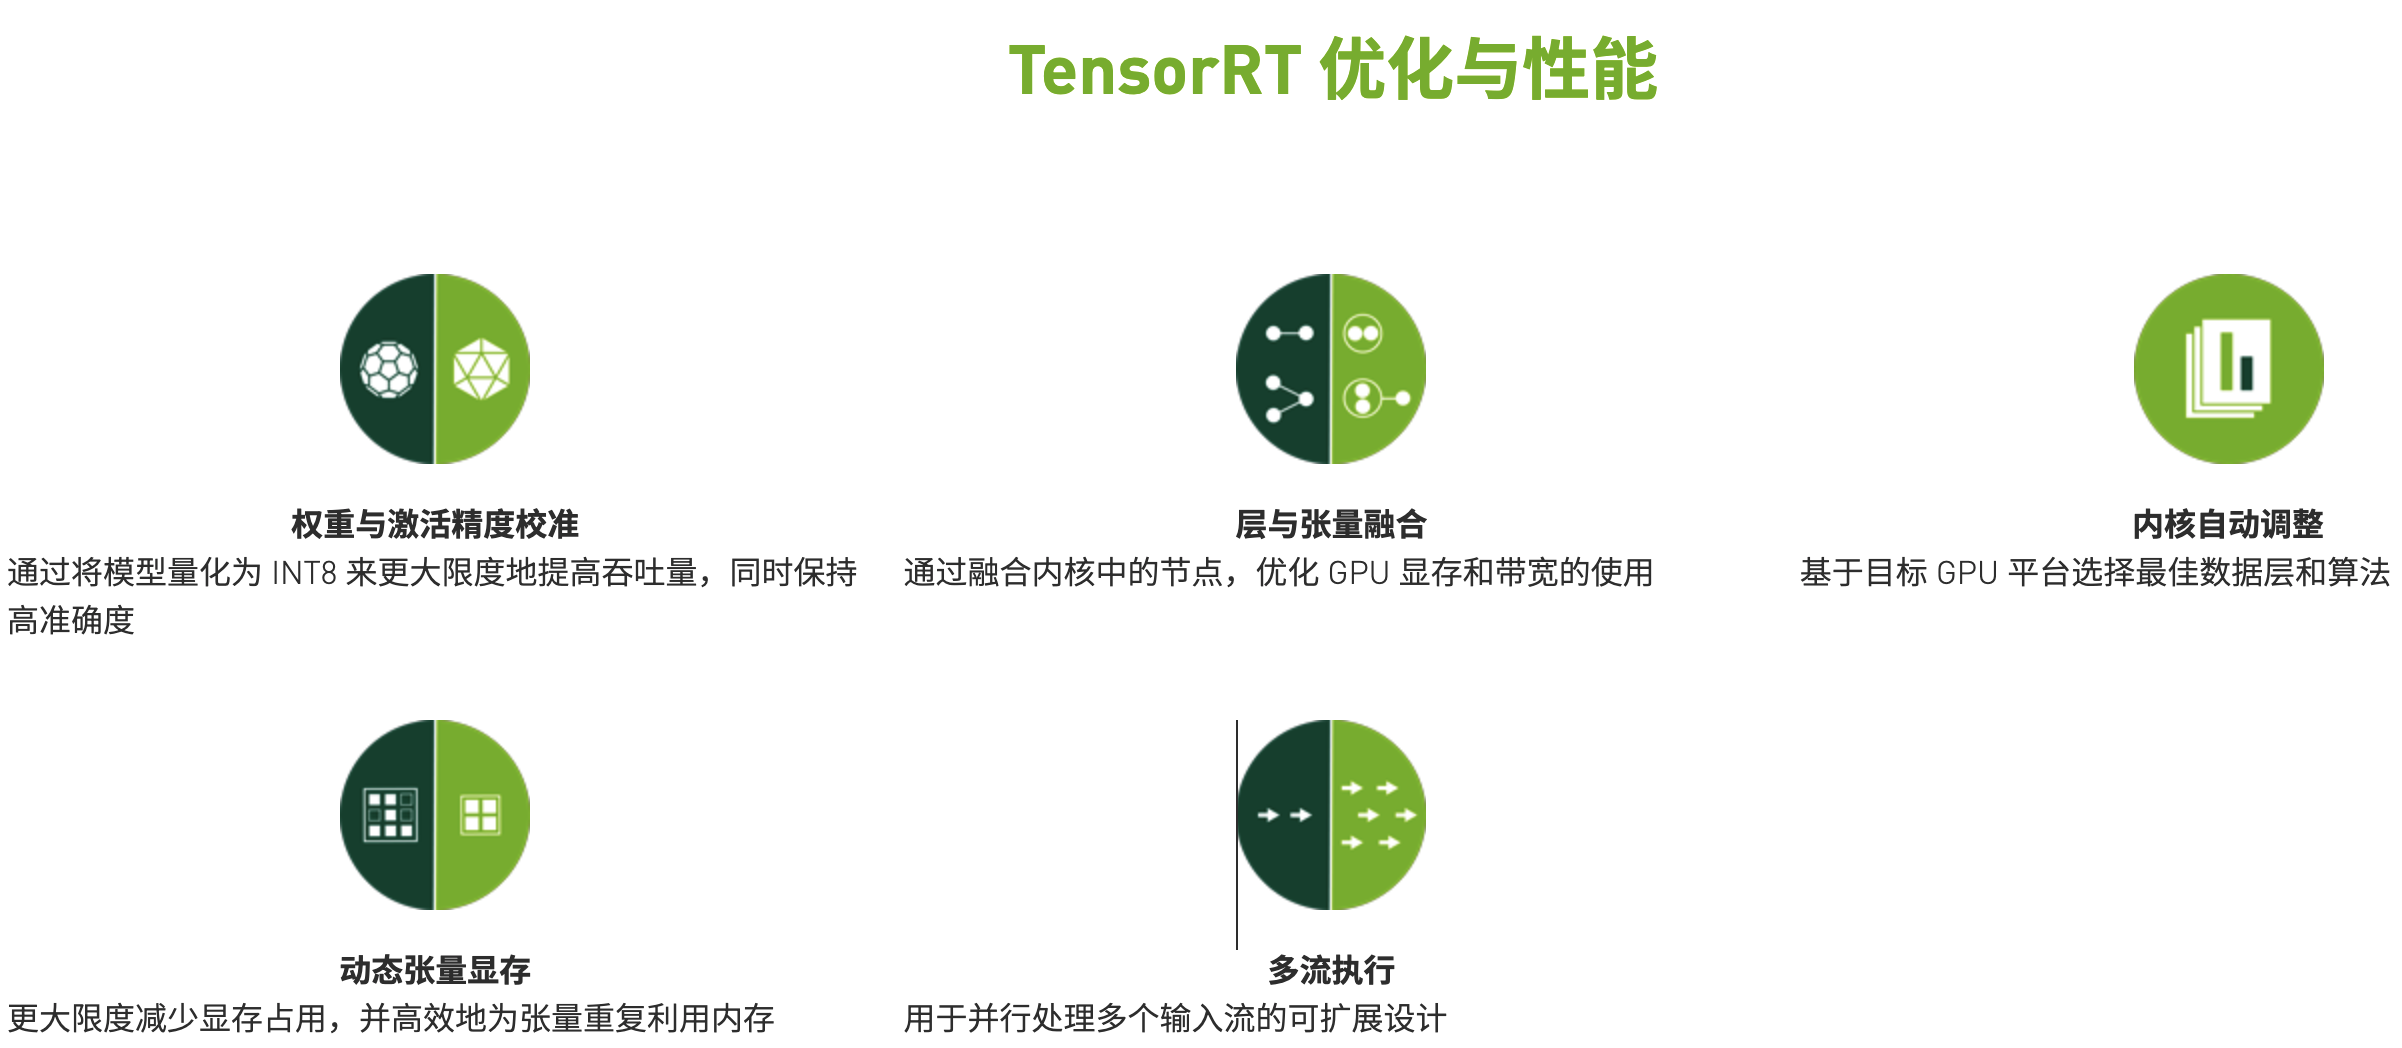 TensorRT的核心部分并没有开源